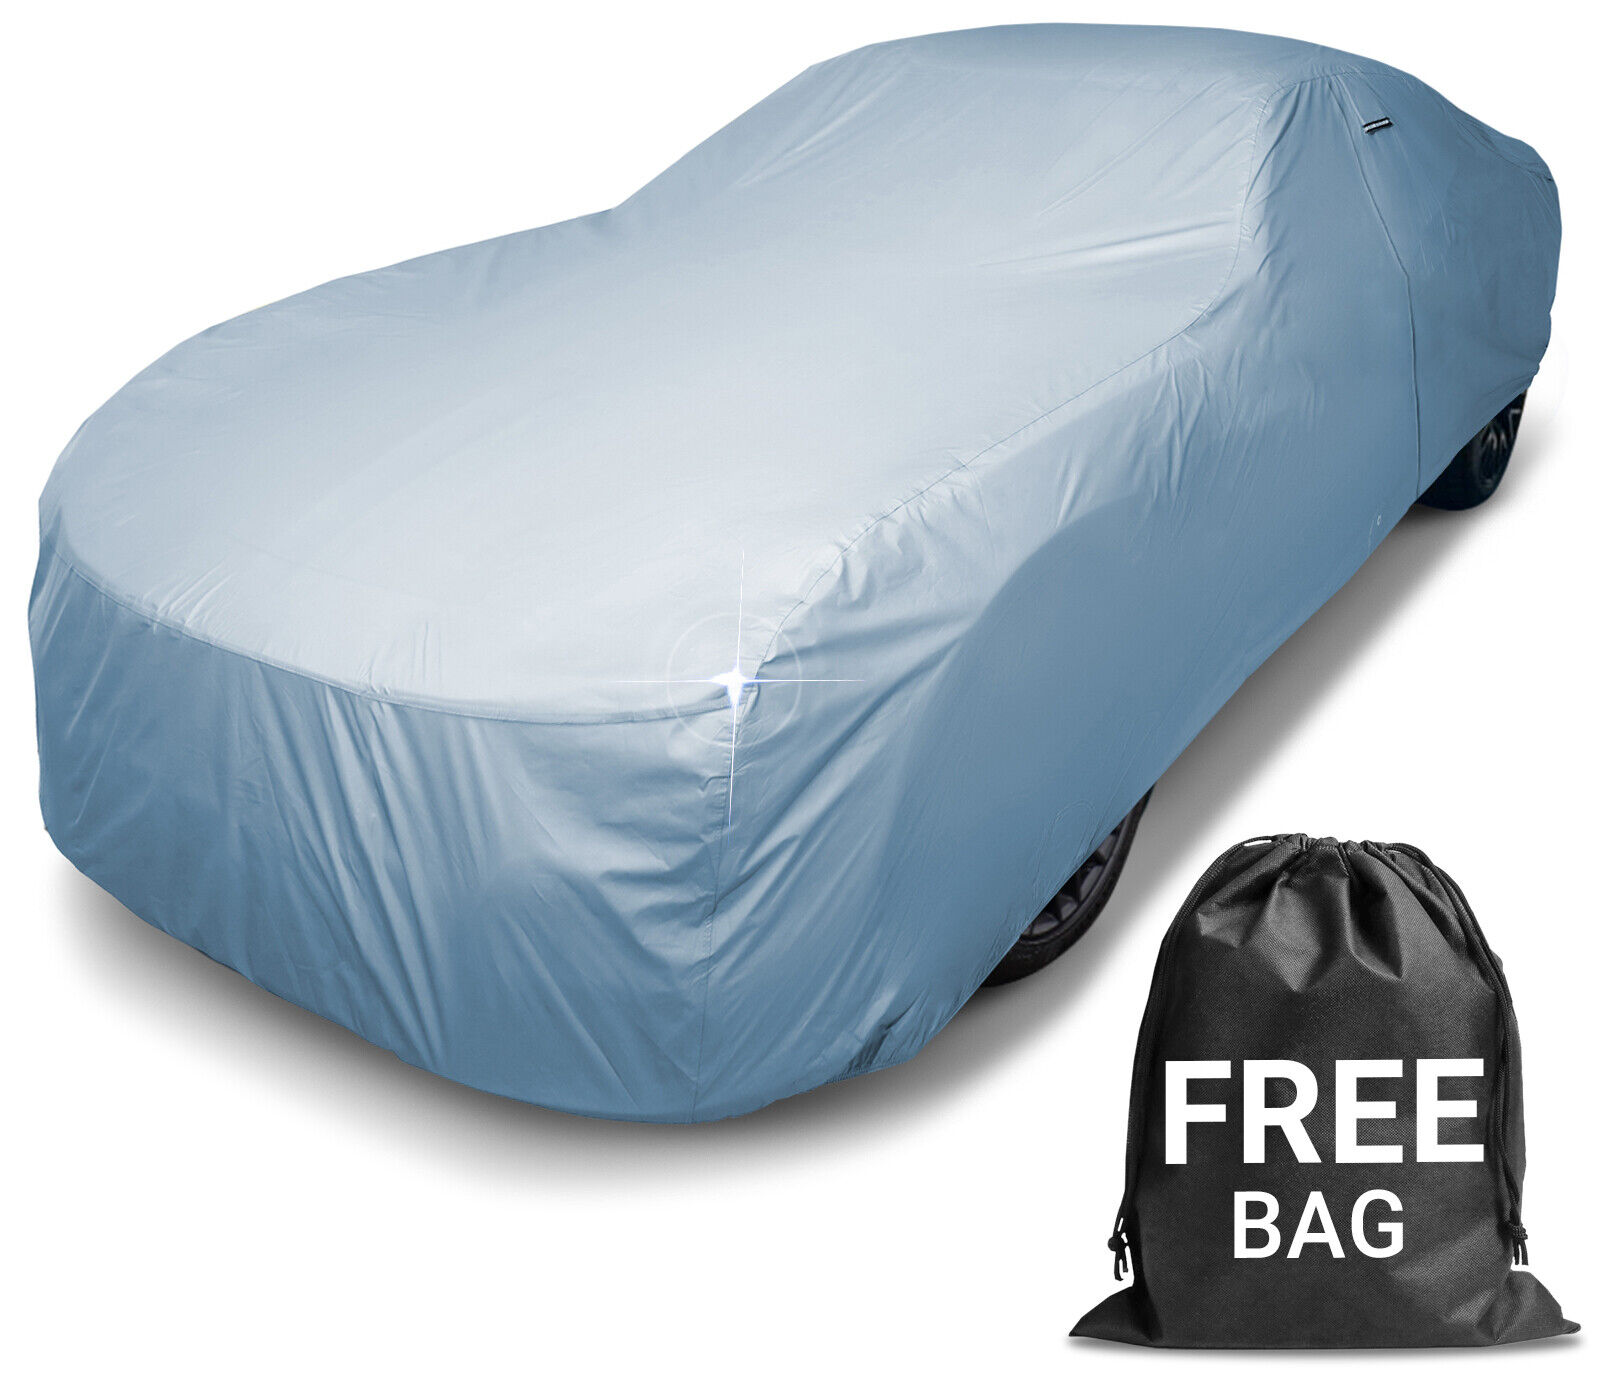 PONTIAC [GRAND VILLE] Premium Custom-Fit Outdoor Waterproof Car Cover